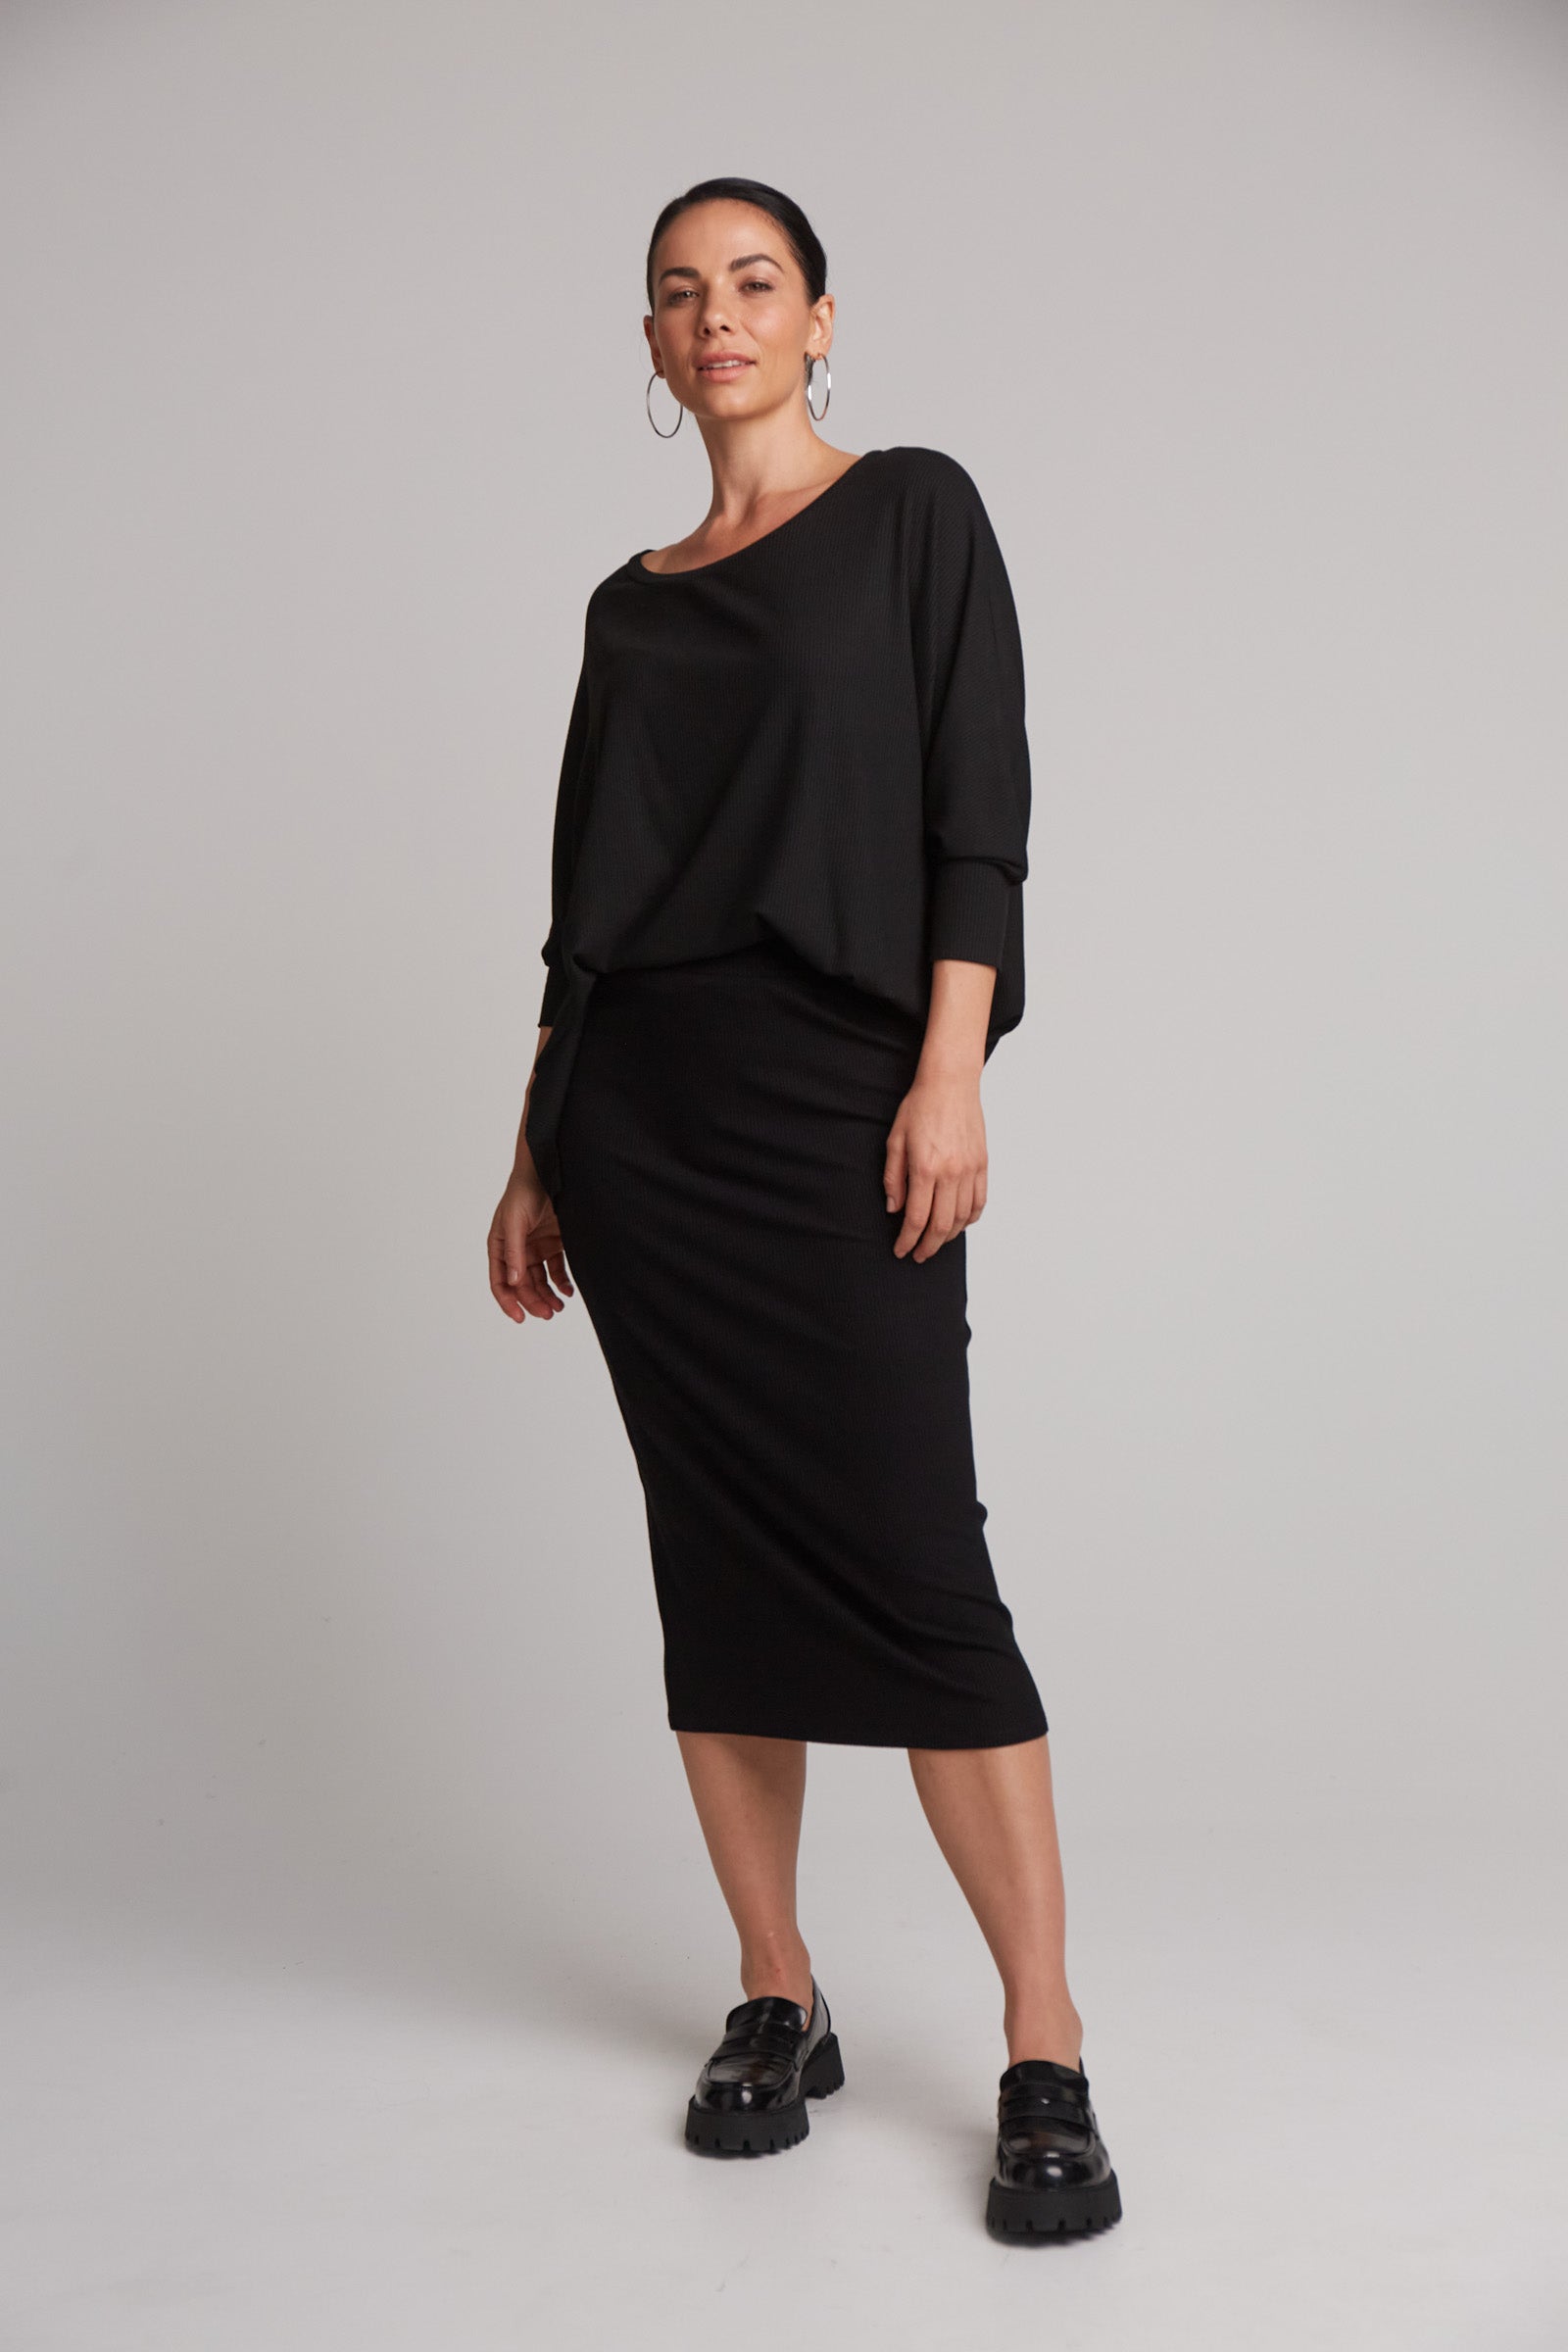 Studio Jersey Skirt - Ebony - eb&ive Clothing - Skirt Mid